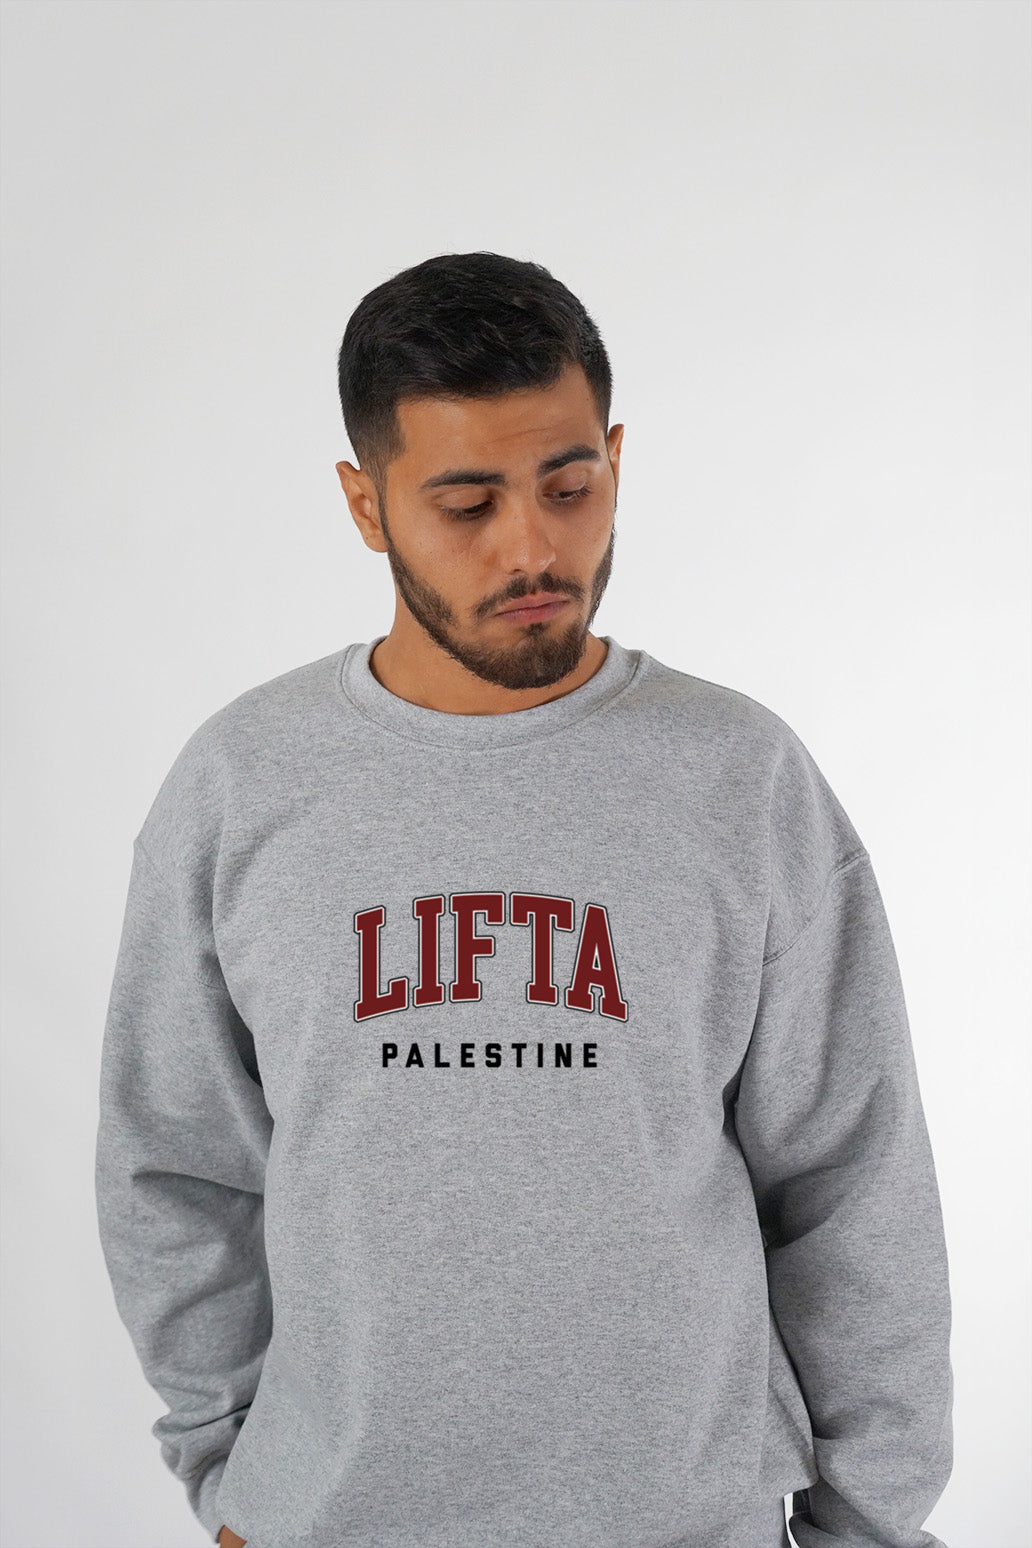 Lifta, Palestine - Sweatshirt